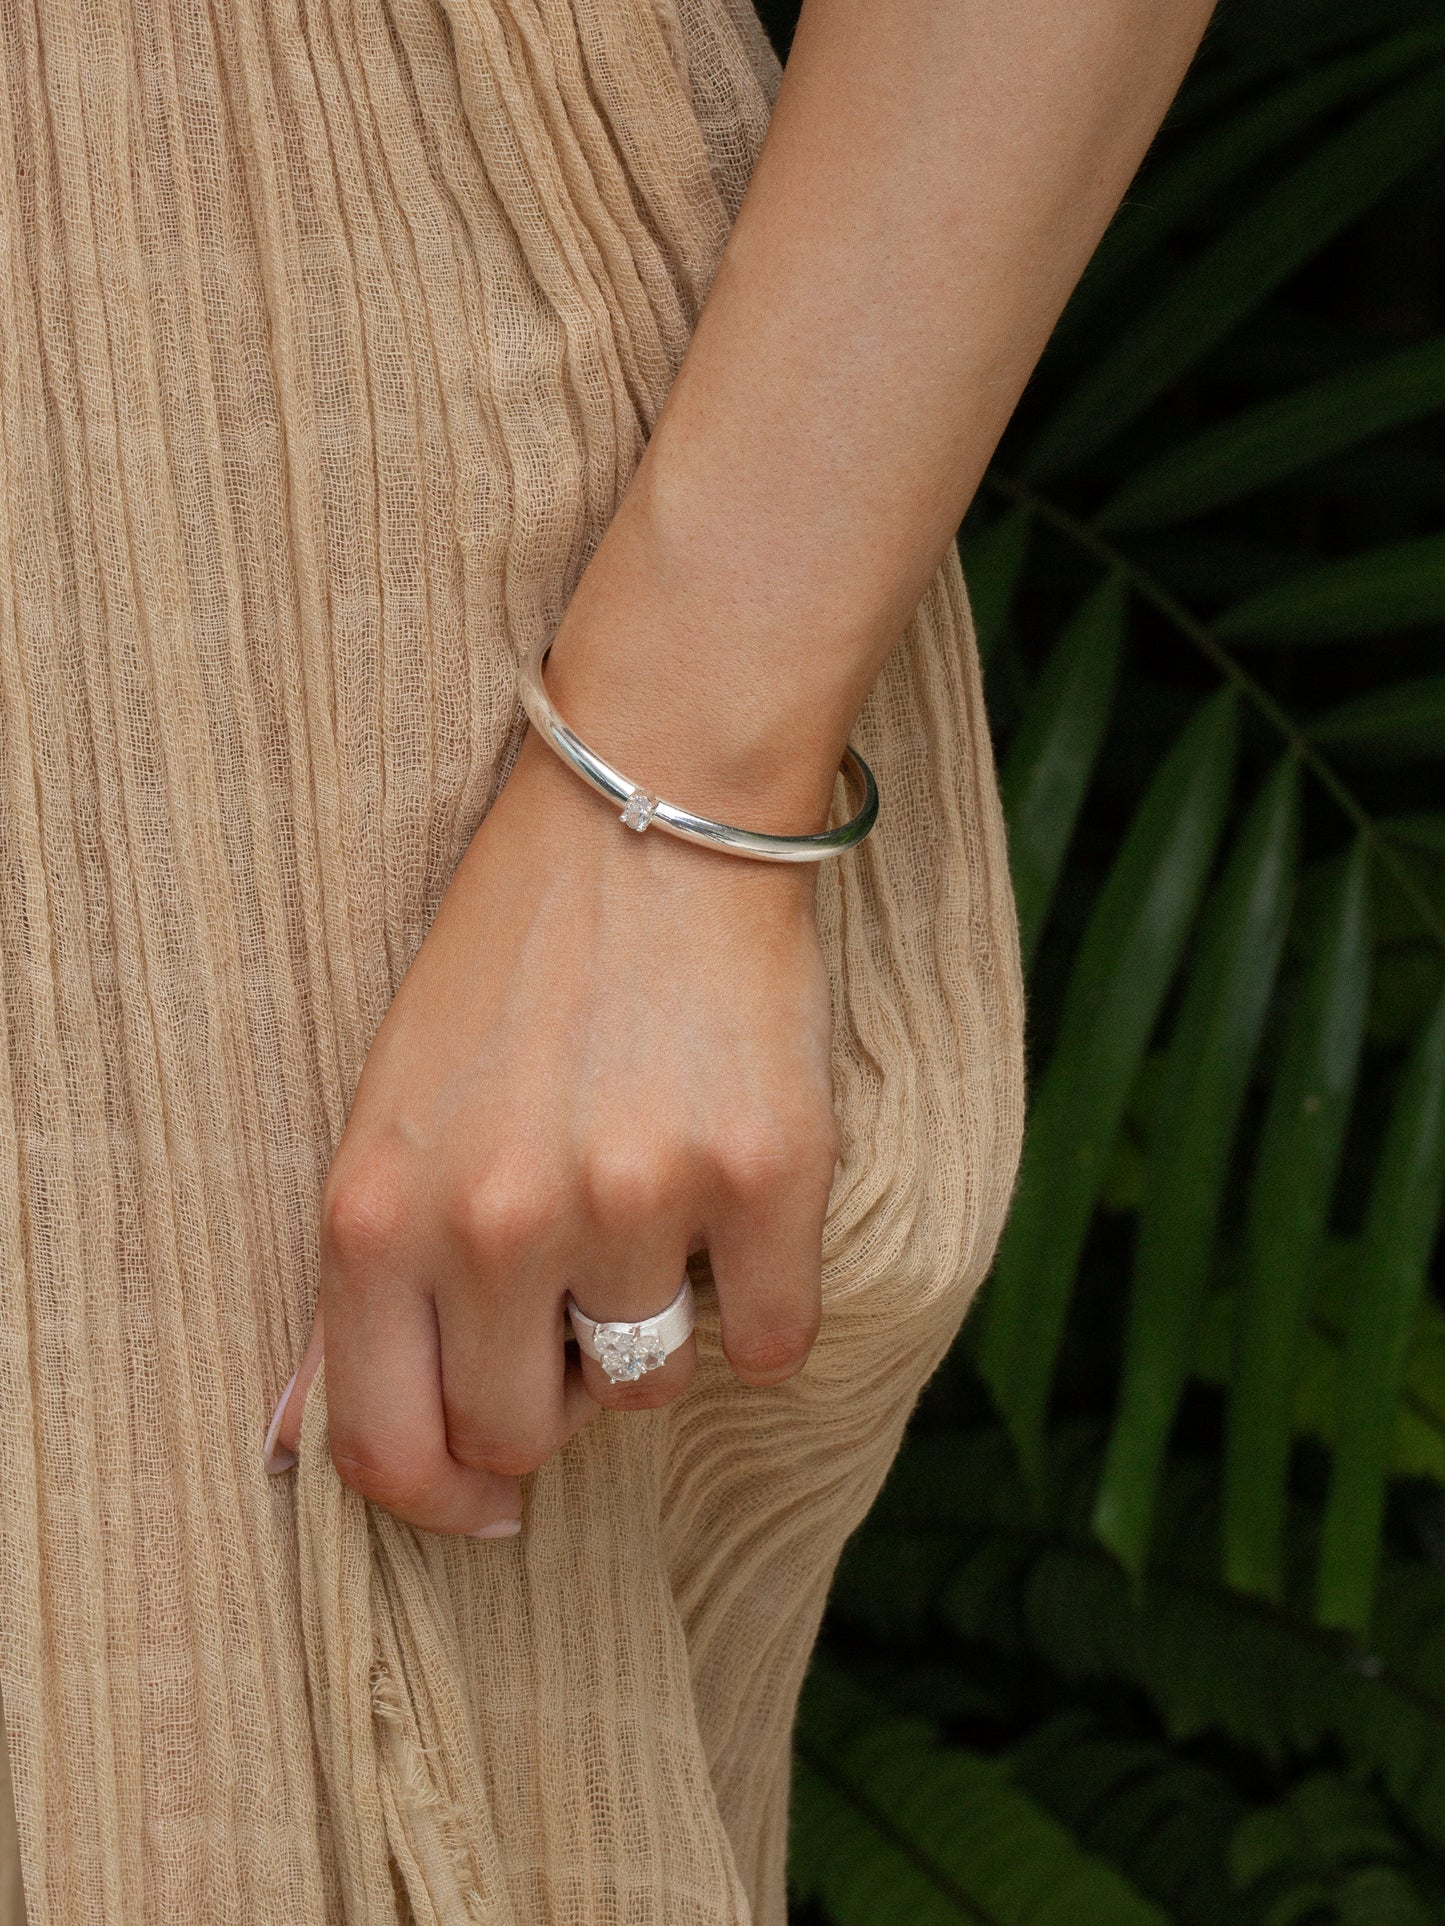 Ruby Diamond Bangle Silver by Felicia Wedin bracelet 925 silver plated brass